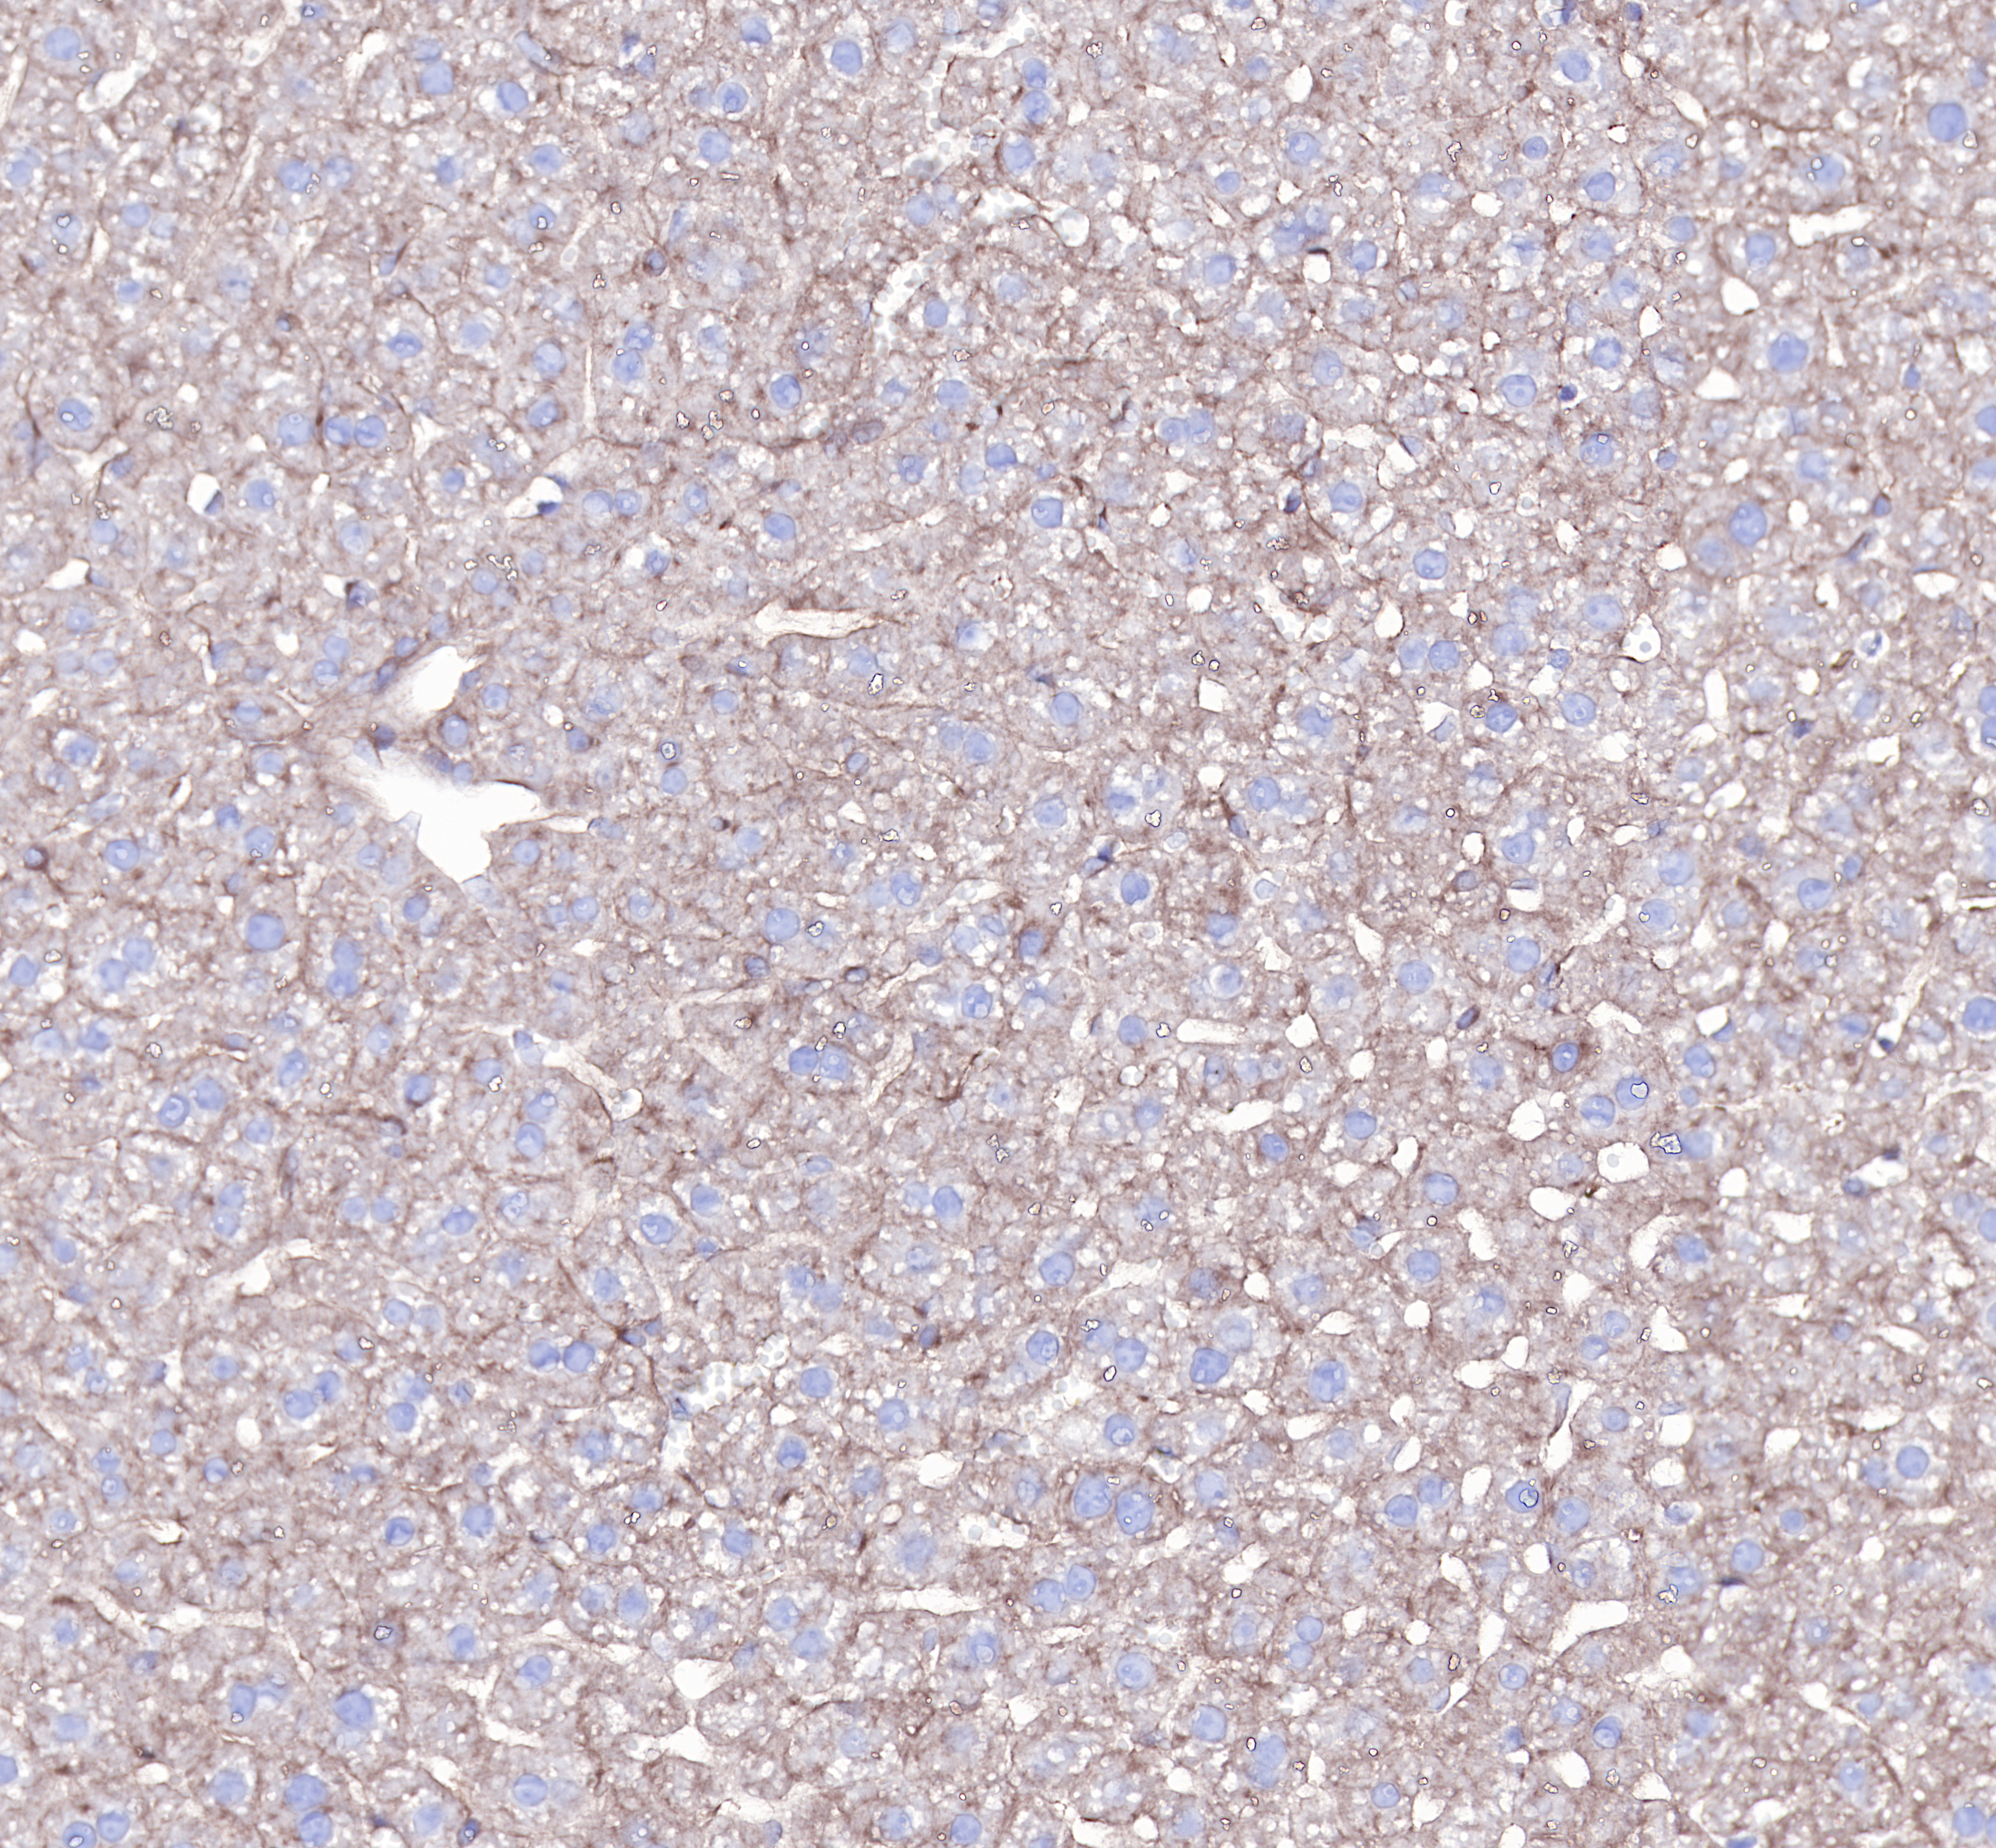 Rabbit anti-β-Tubulin Monoclonal Antibody